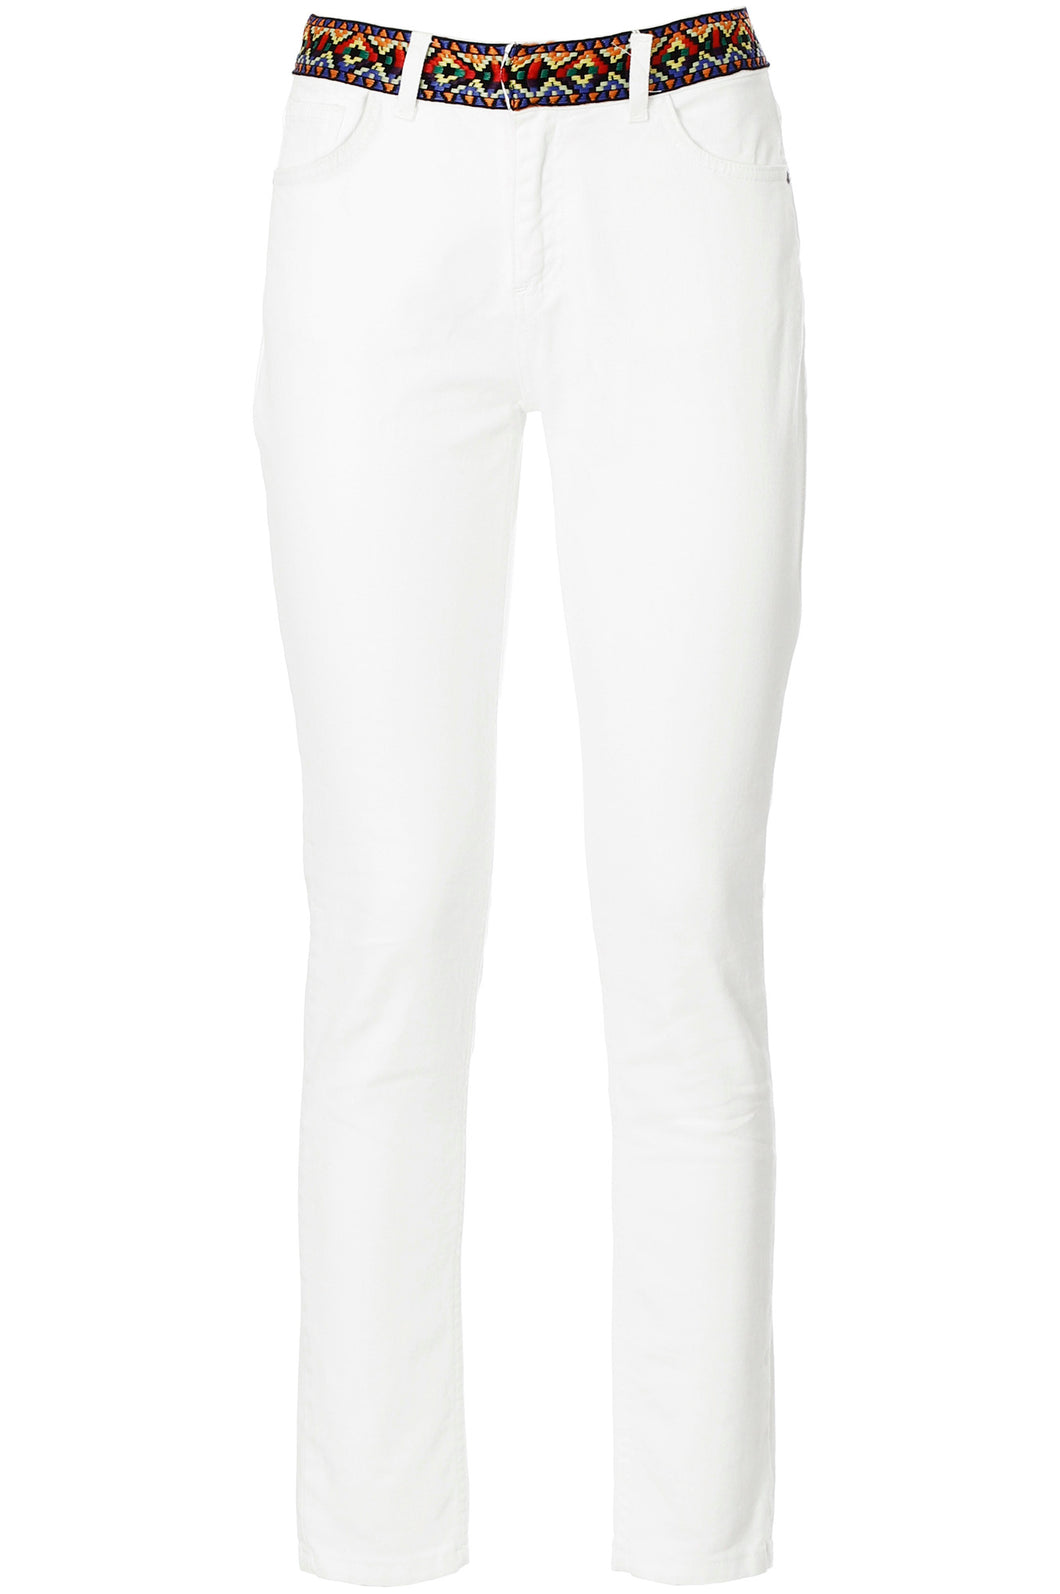 Pantalone Denim Donna colore Bianco